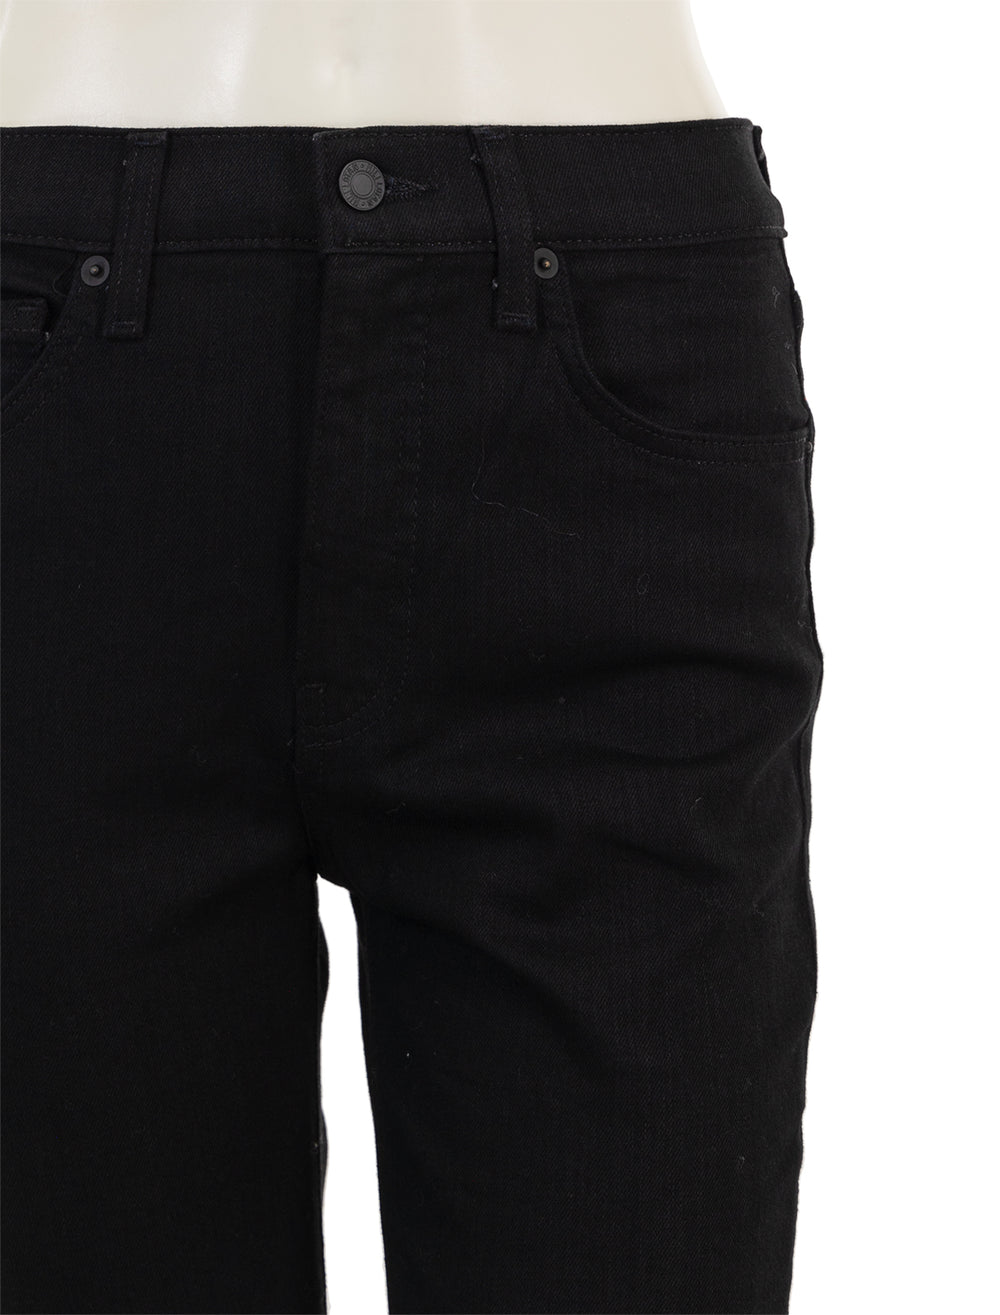 Close-up view of Nili Lotan's jonas skinny jean in black.